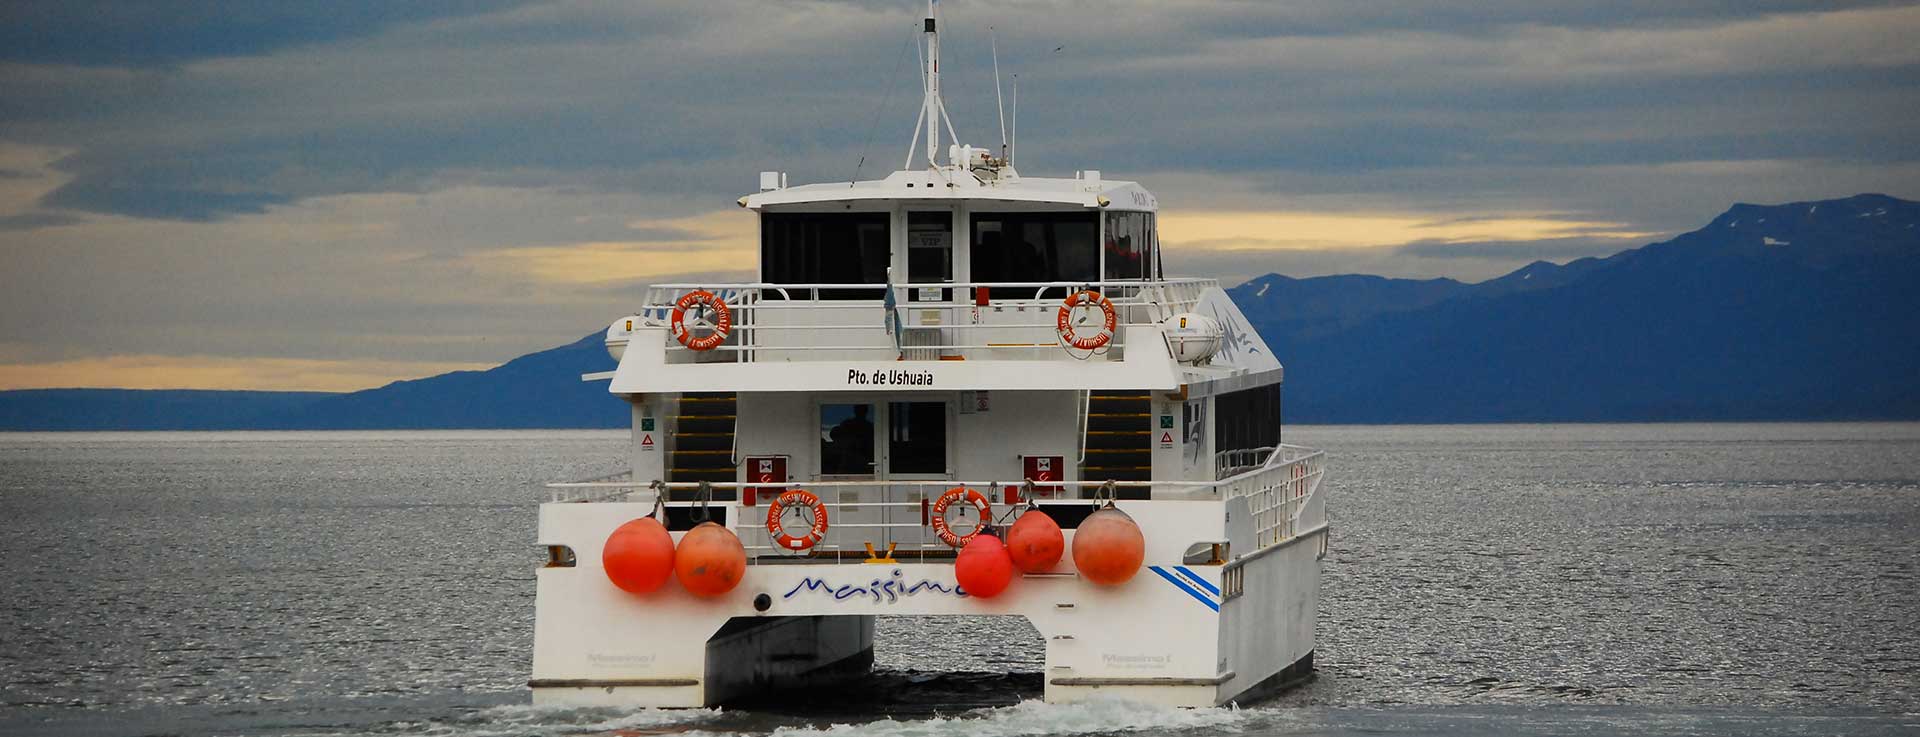 catamaranes ushuaia